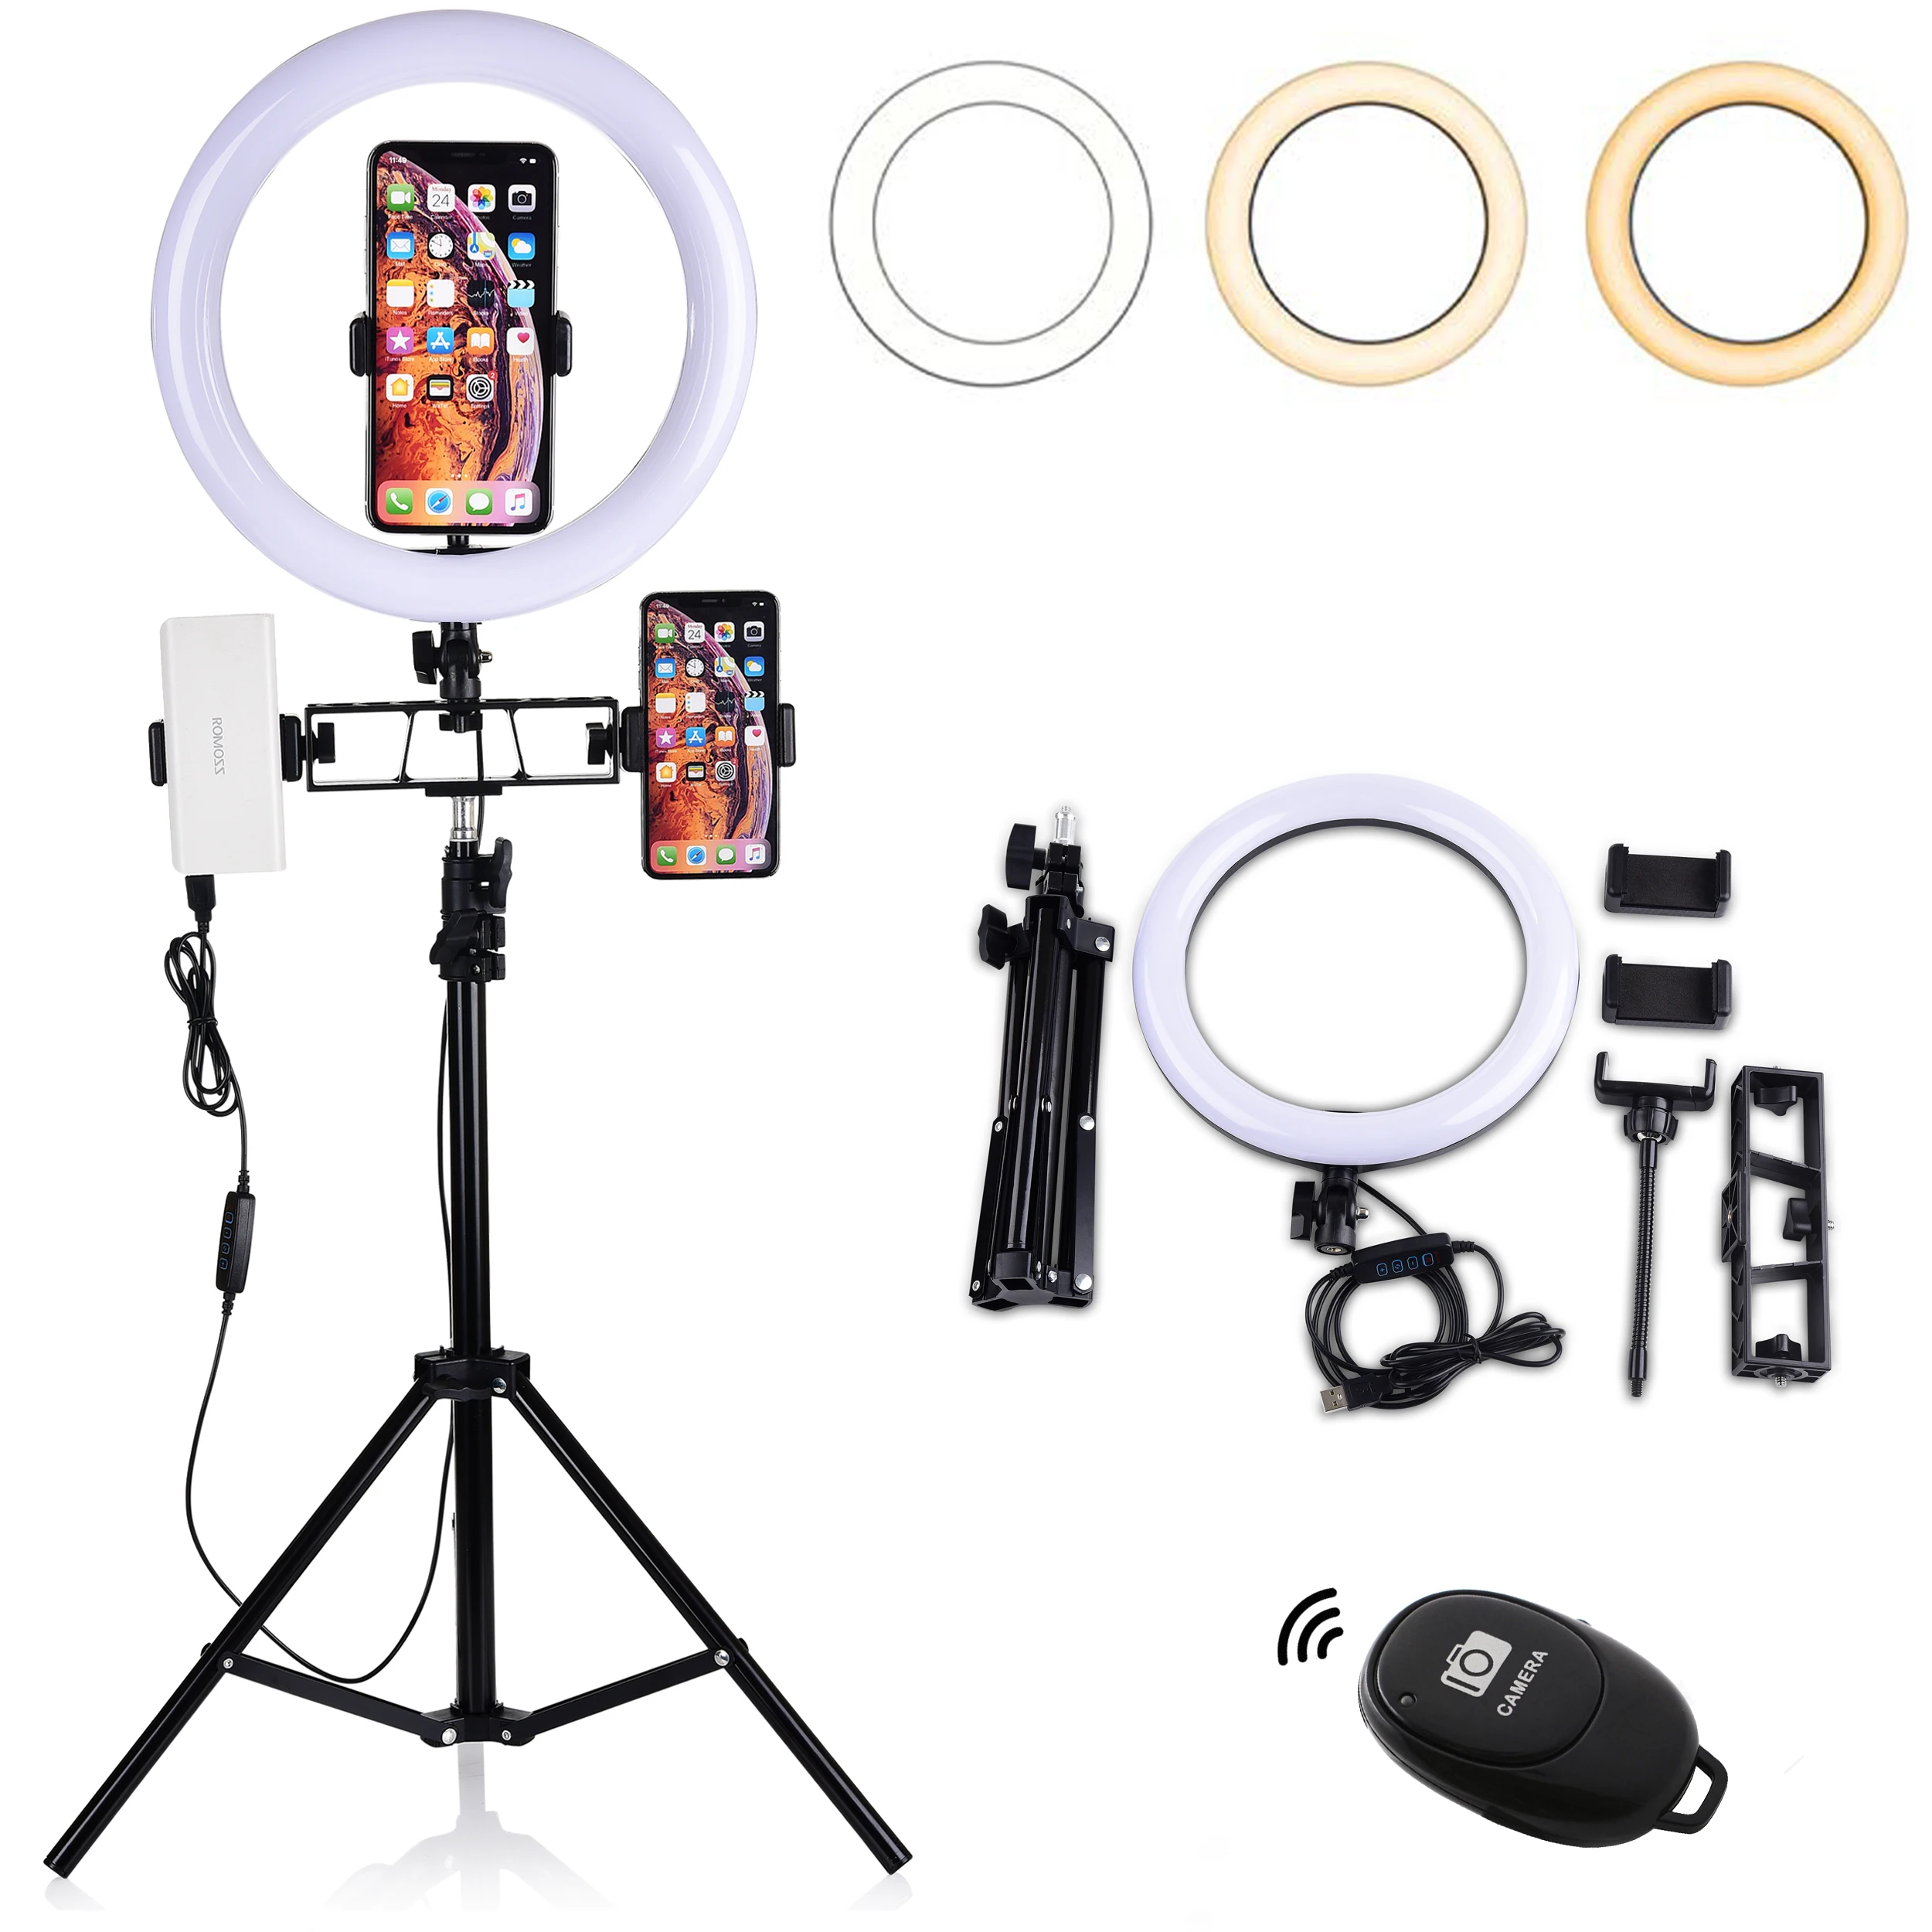 

Dimmable LED Selfie Ring Light 5500k YouTube Video Makeup Lighting&160cm Adjustable Camera Tripod Stand/Phone Holder/Bluetooth